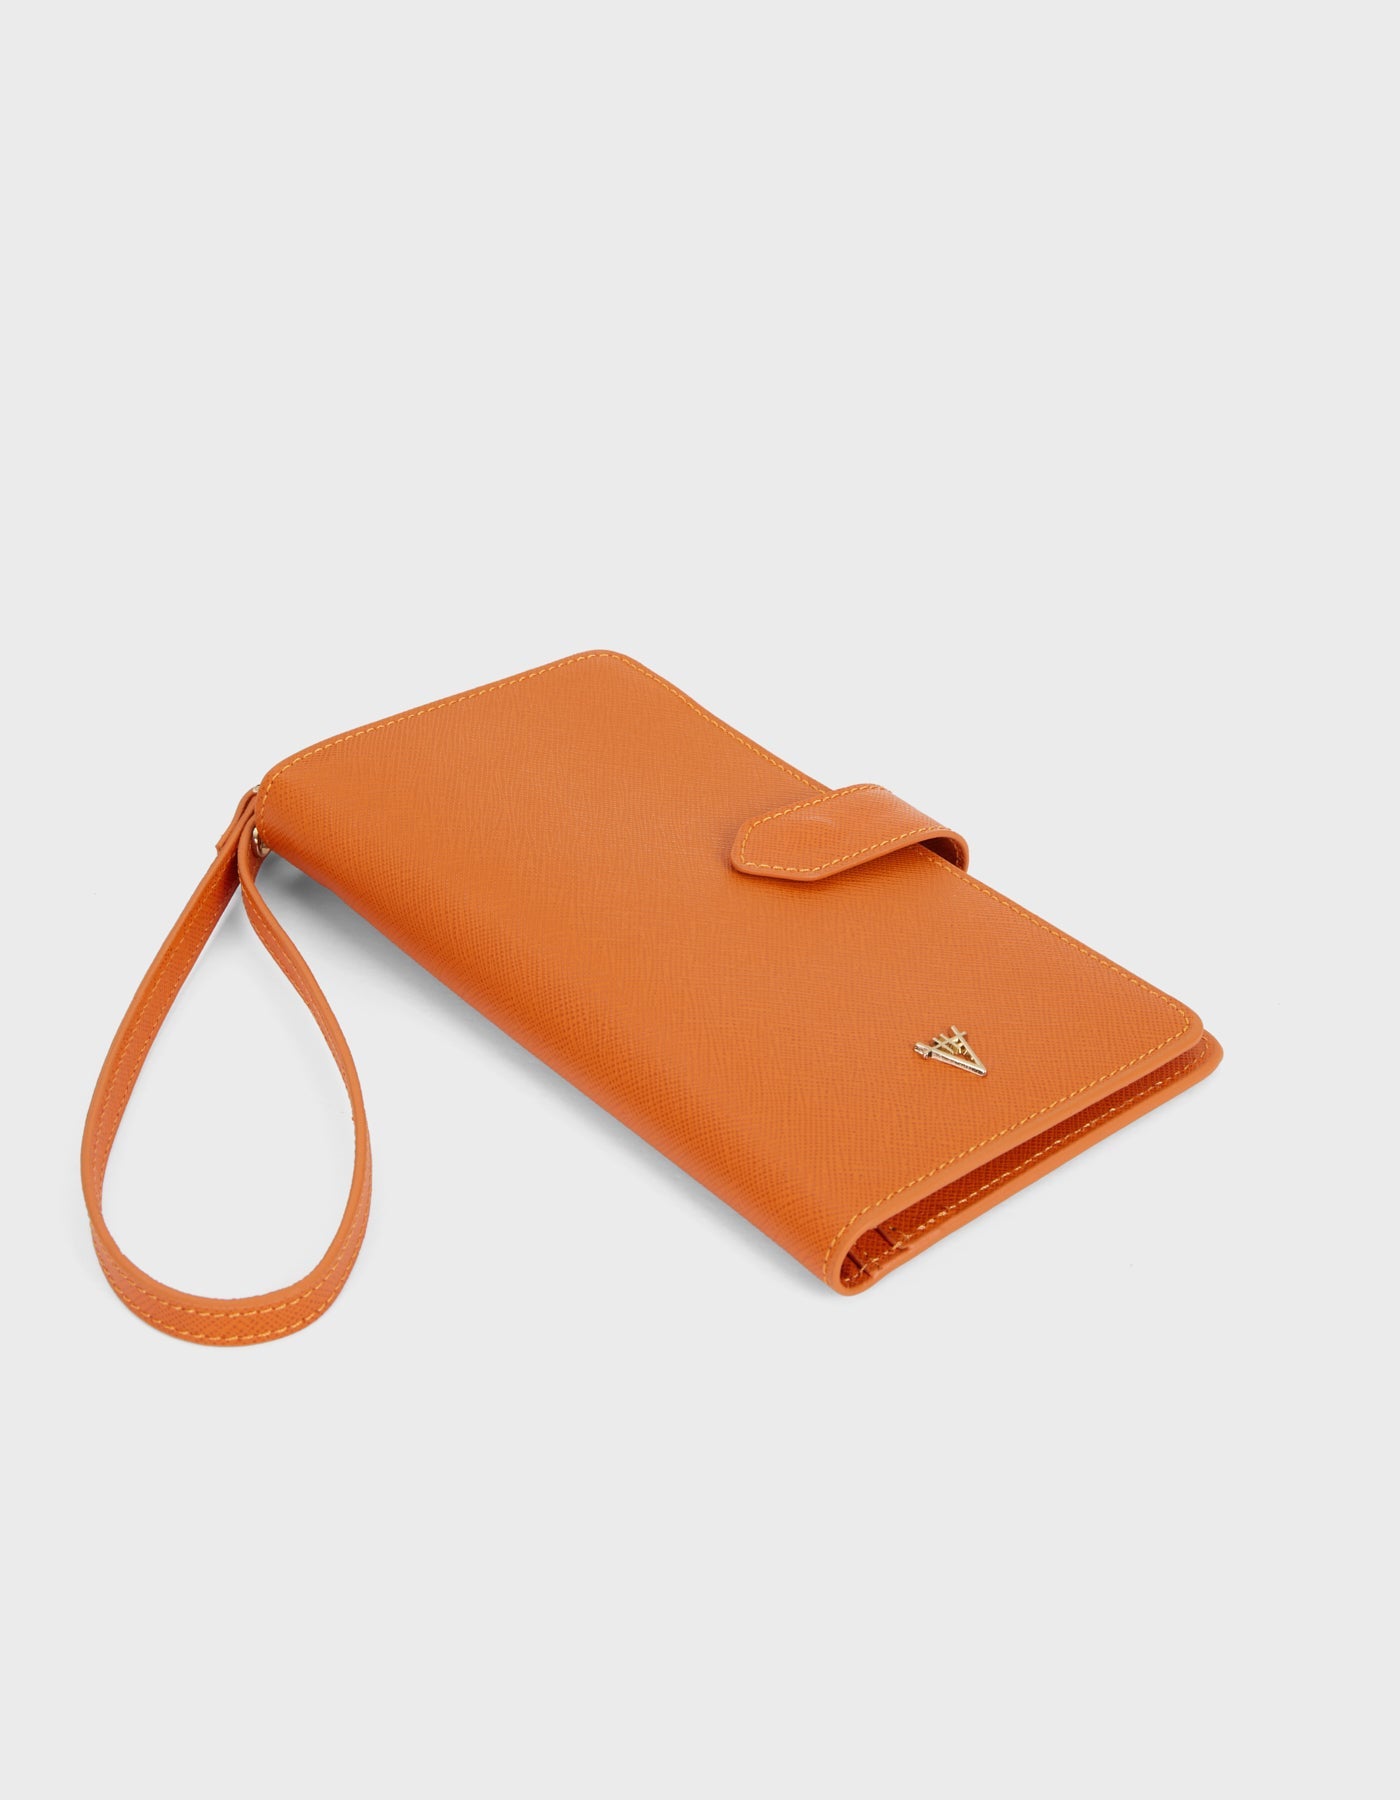 HiVa Atelier | Ita Crossbody Bag and Wallet Burnt Orange | Beautiful and Versatile